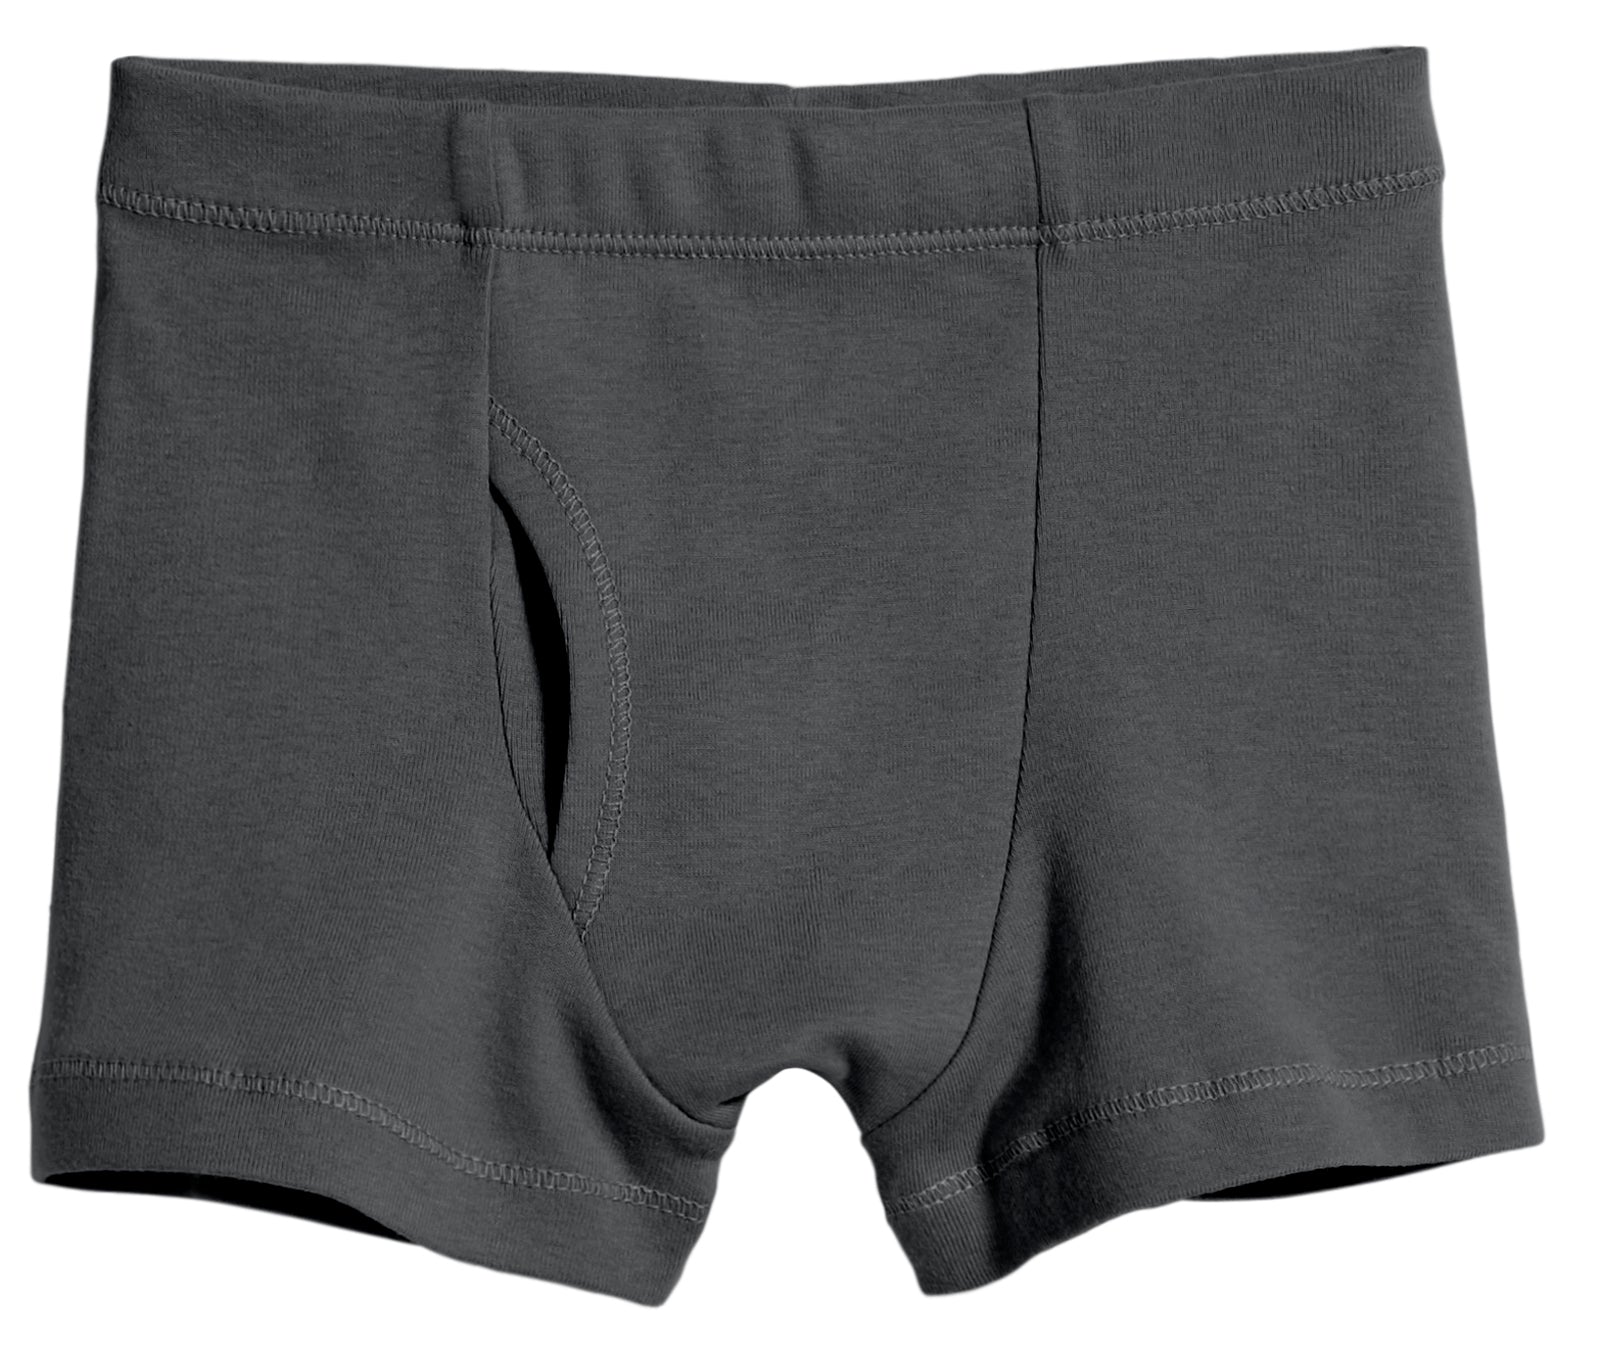 B and Q 6 Packs Toddler Little Boys Kids Underwear Cotton Boxer Briefs Size  4T 5T 6T 7T 8T